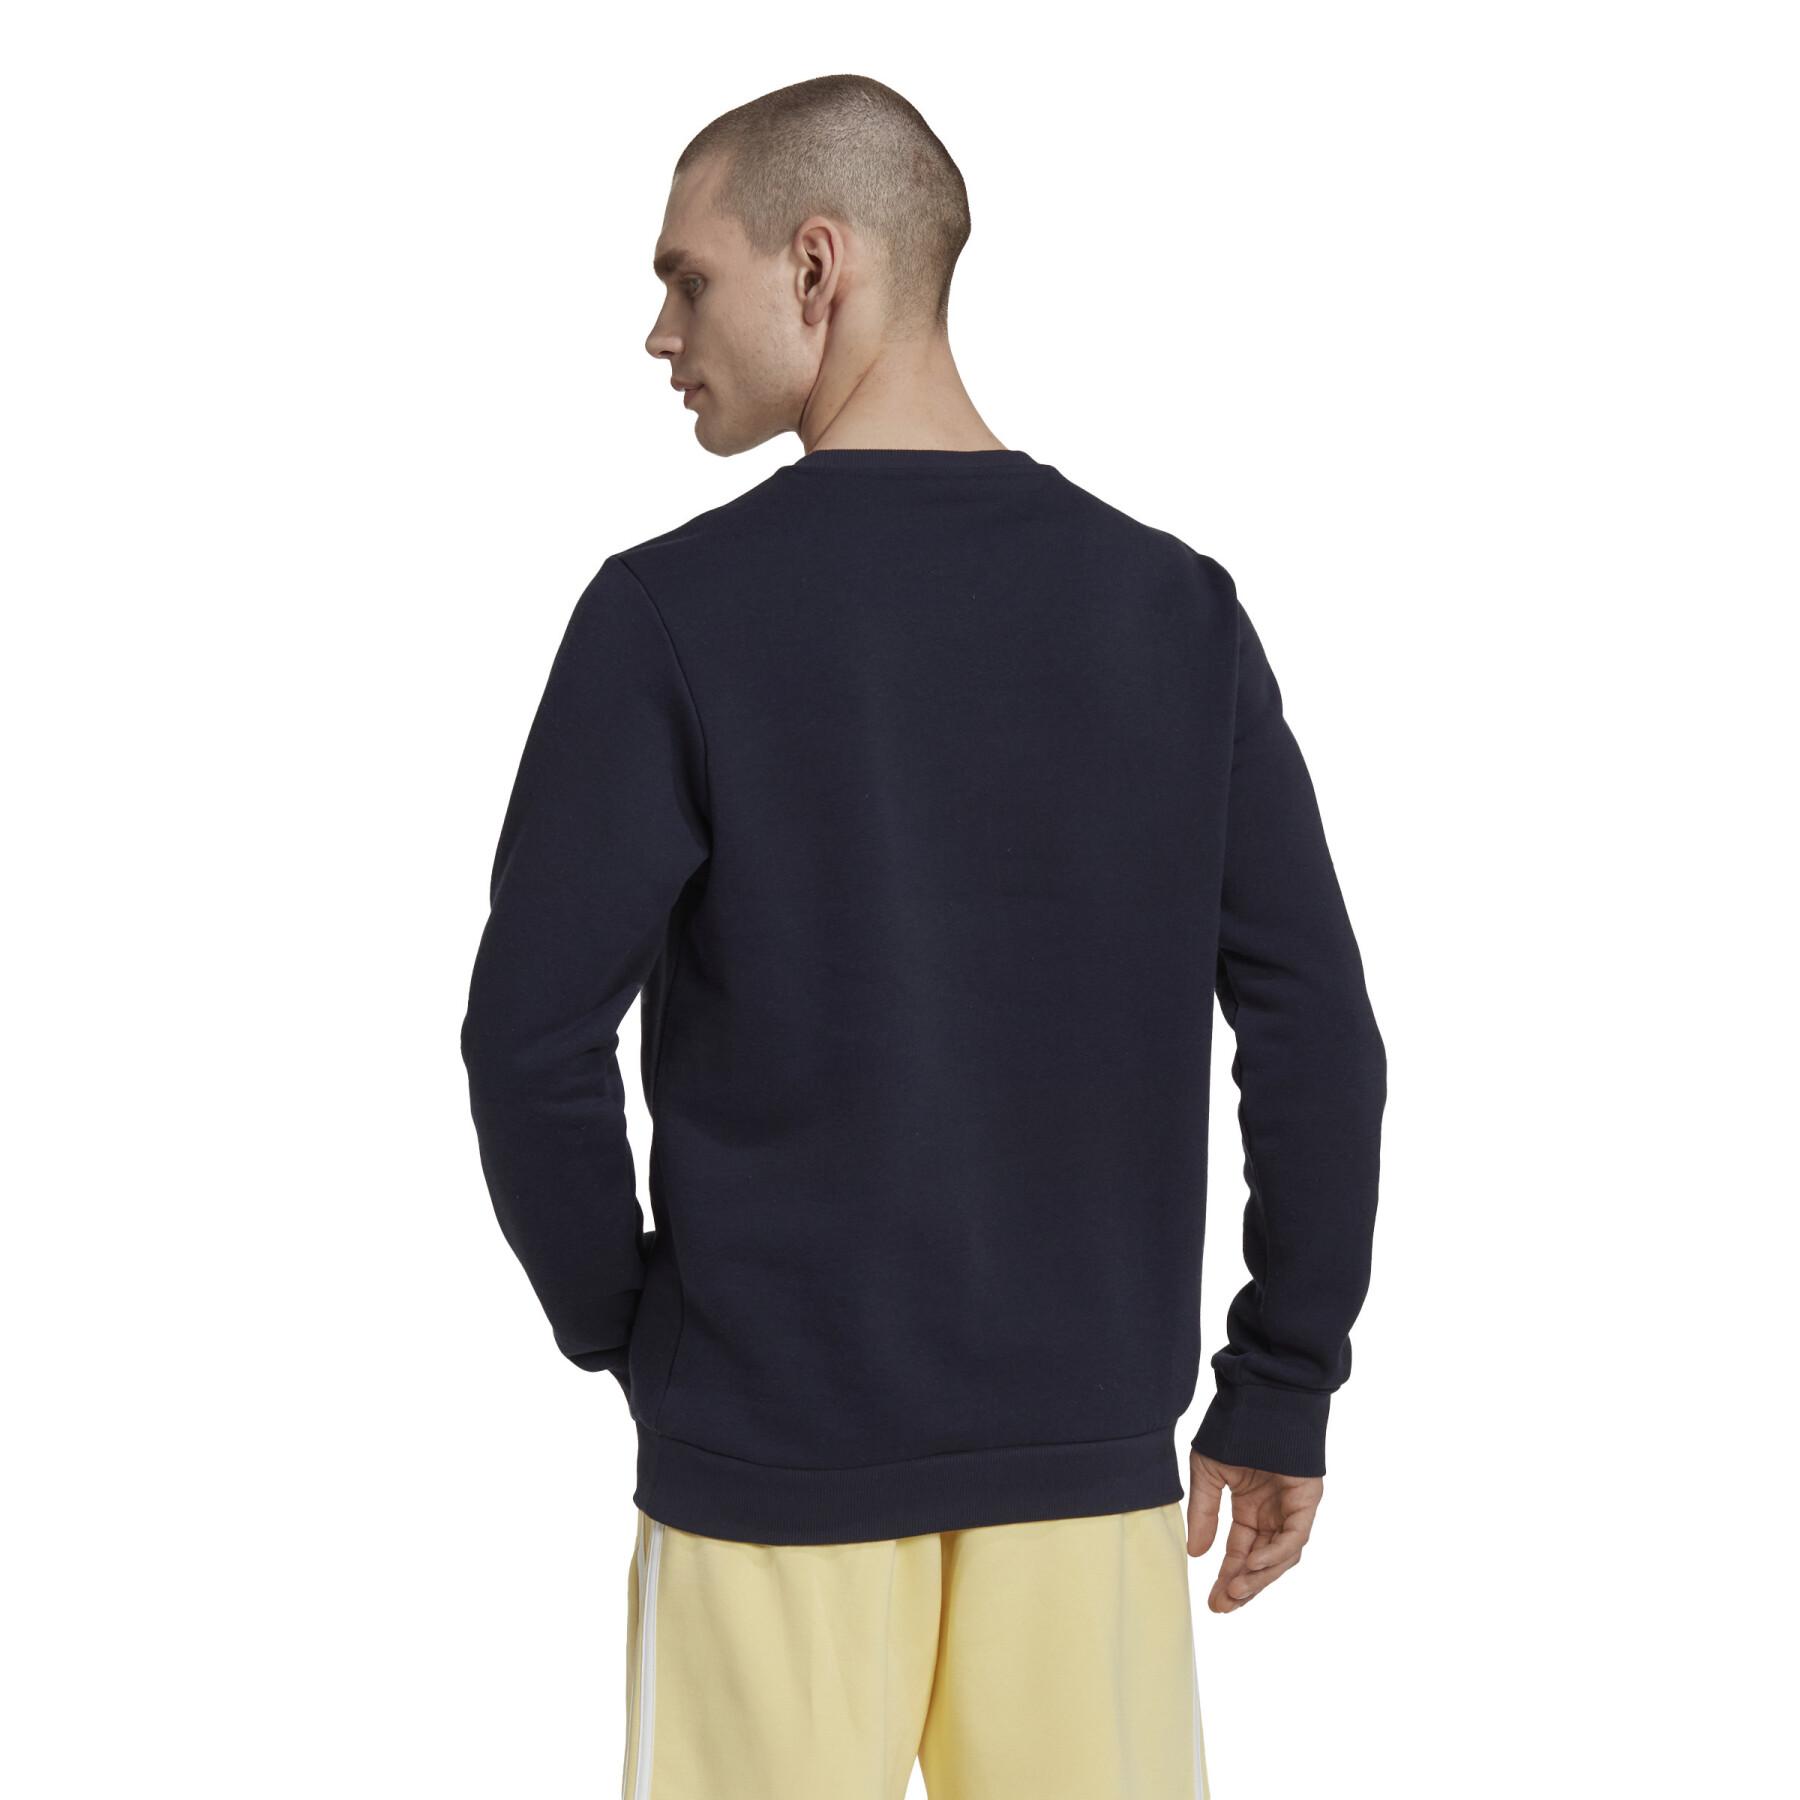 Sweatshirt à grande logo adidas Essentials